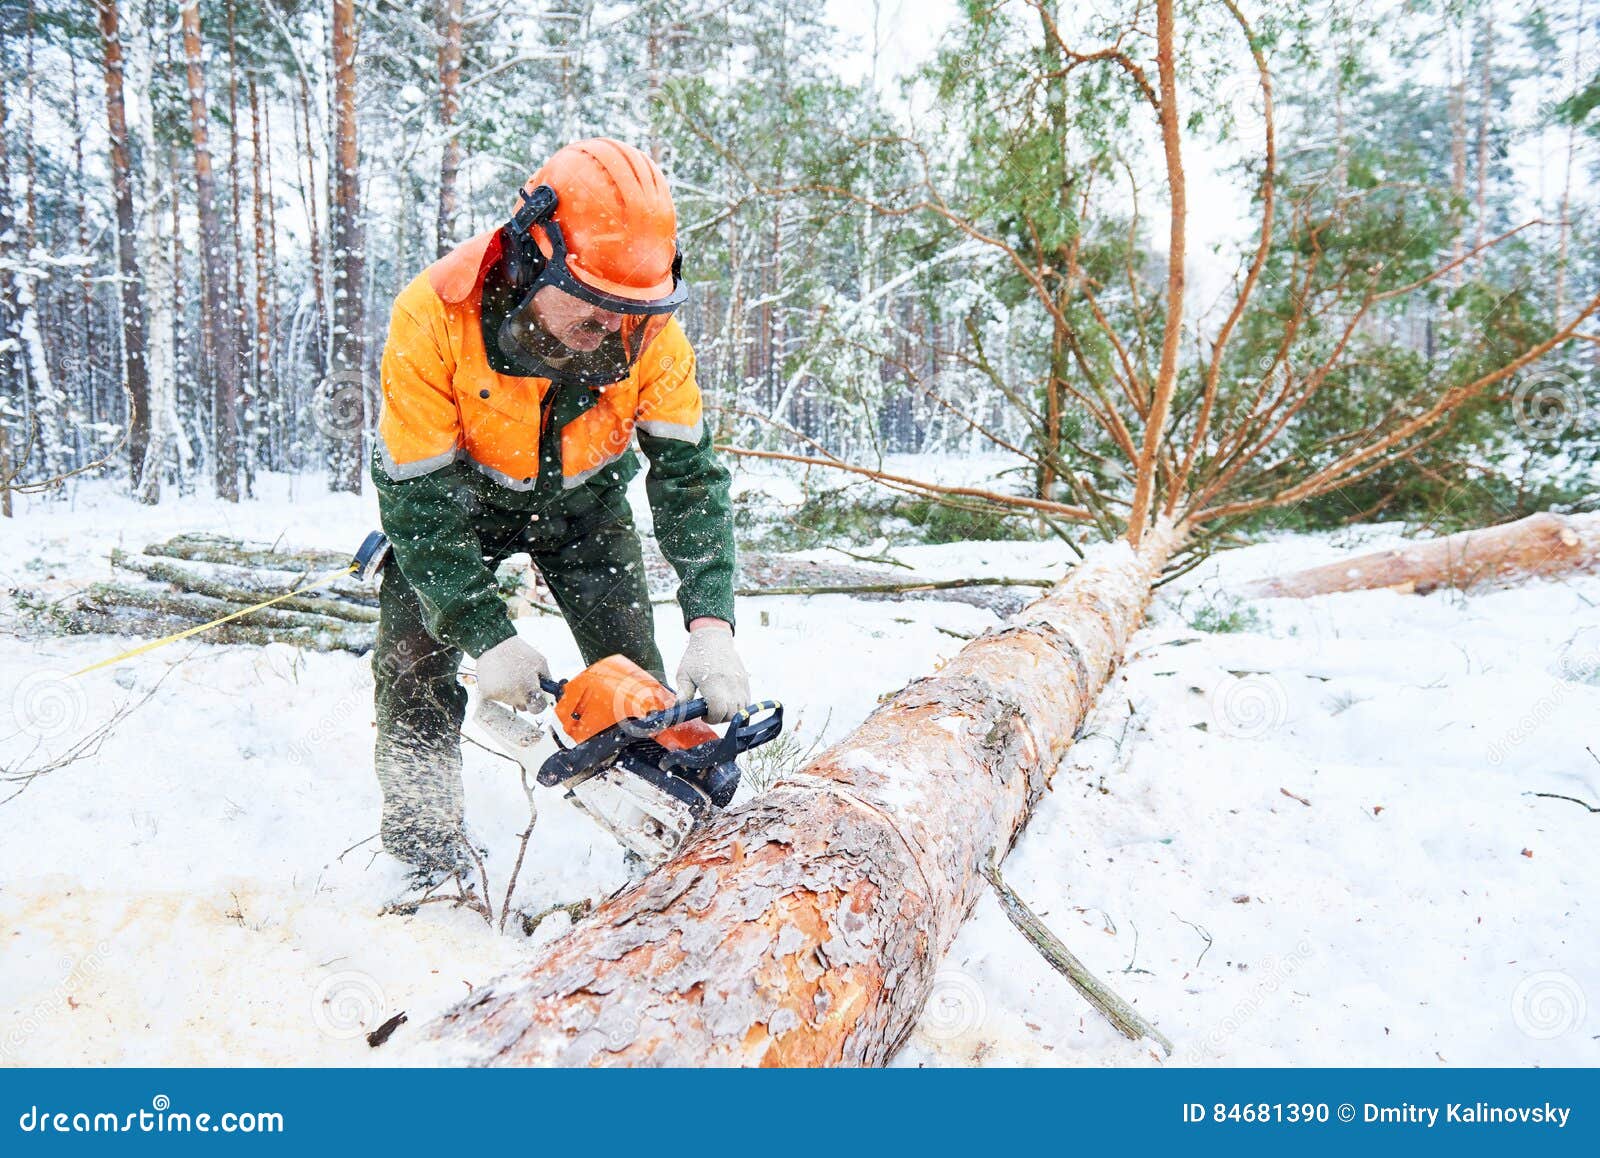 lumberjack cutting tree in snow winter forest